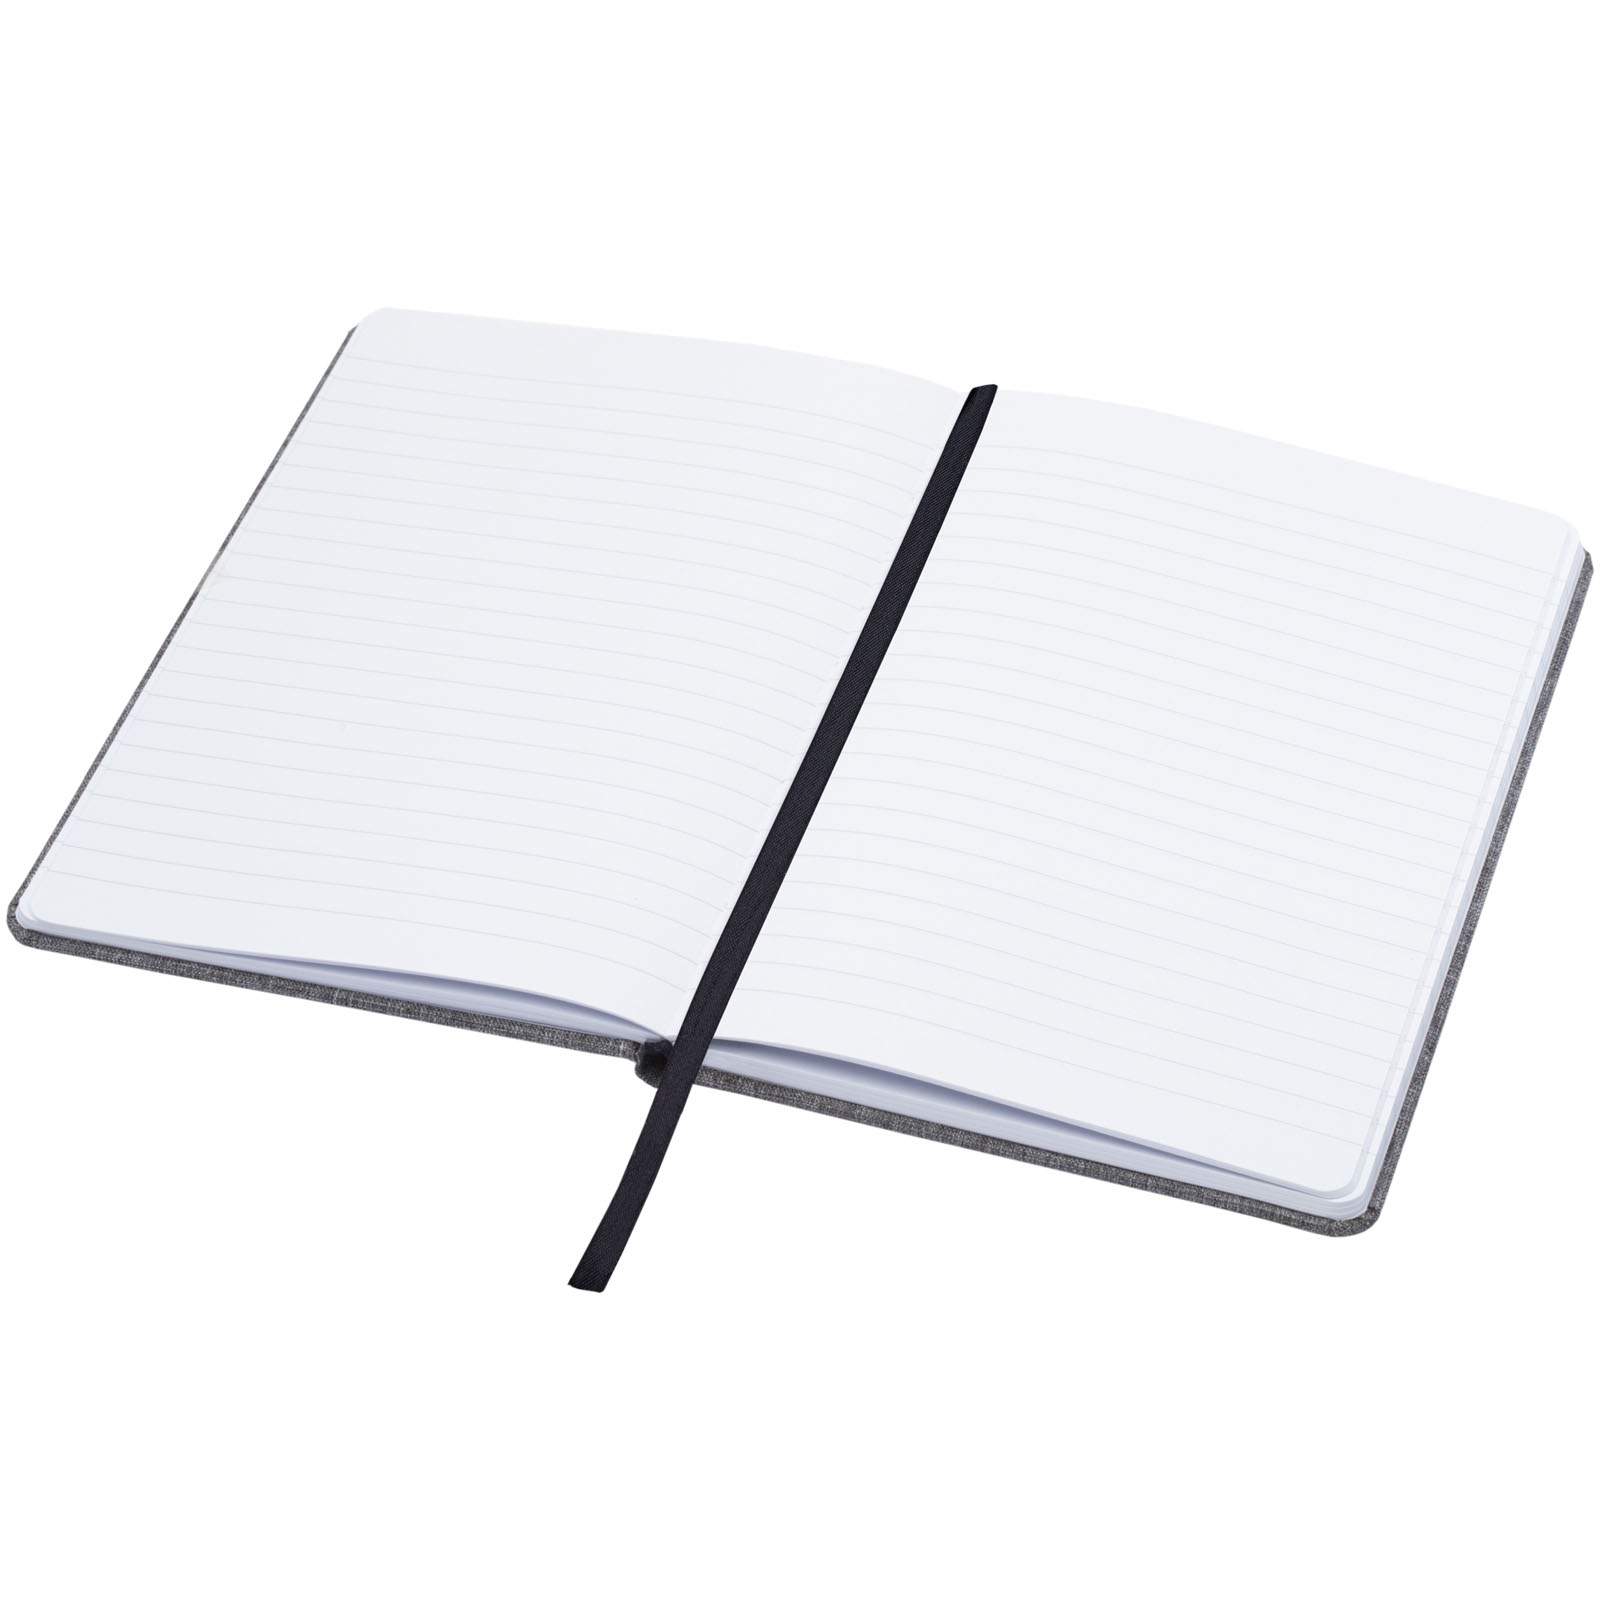 Advertising Notebooks - Orin A5 RPET notebook - 3